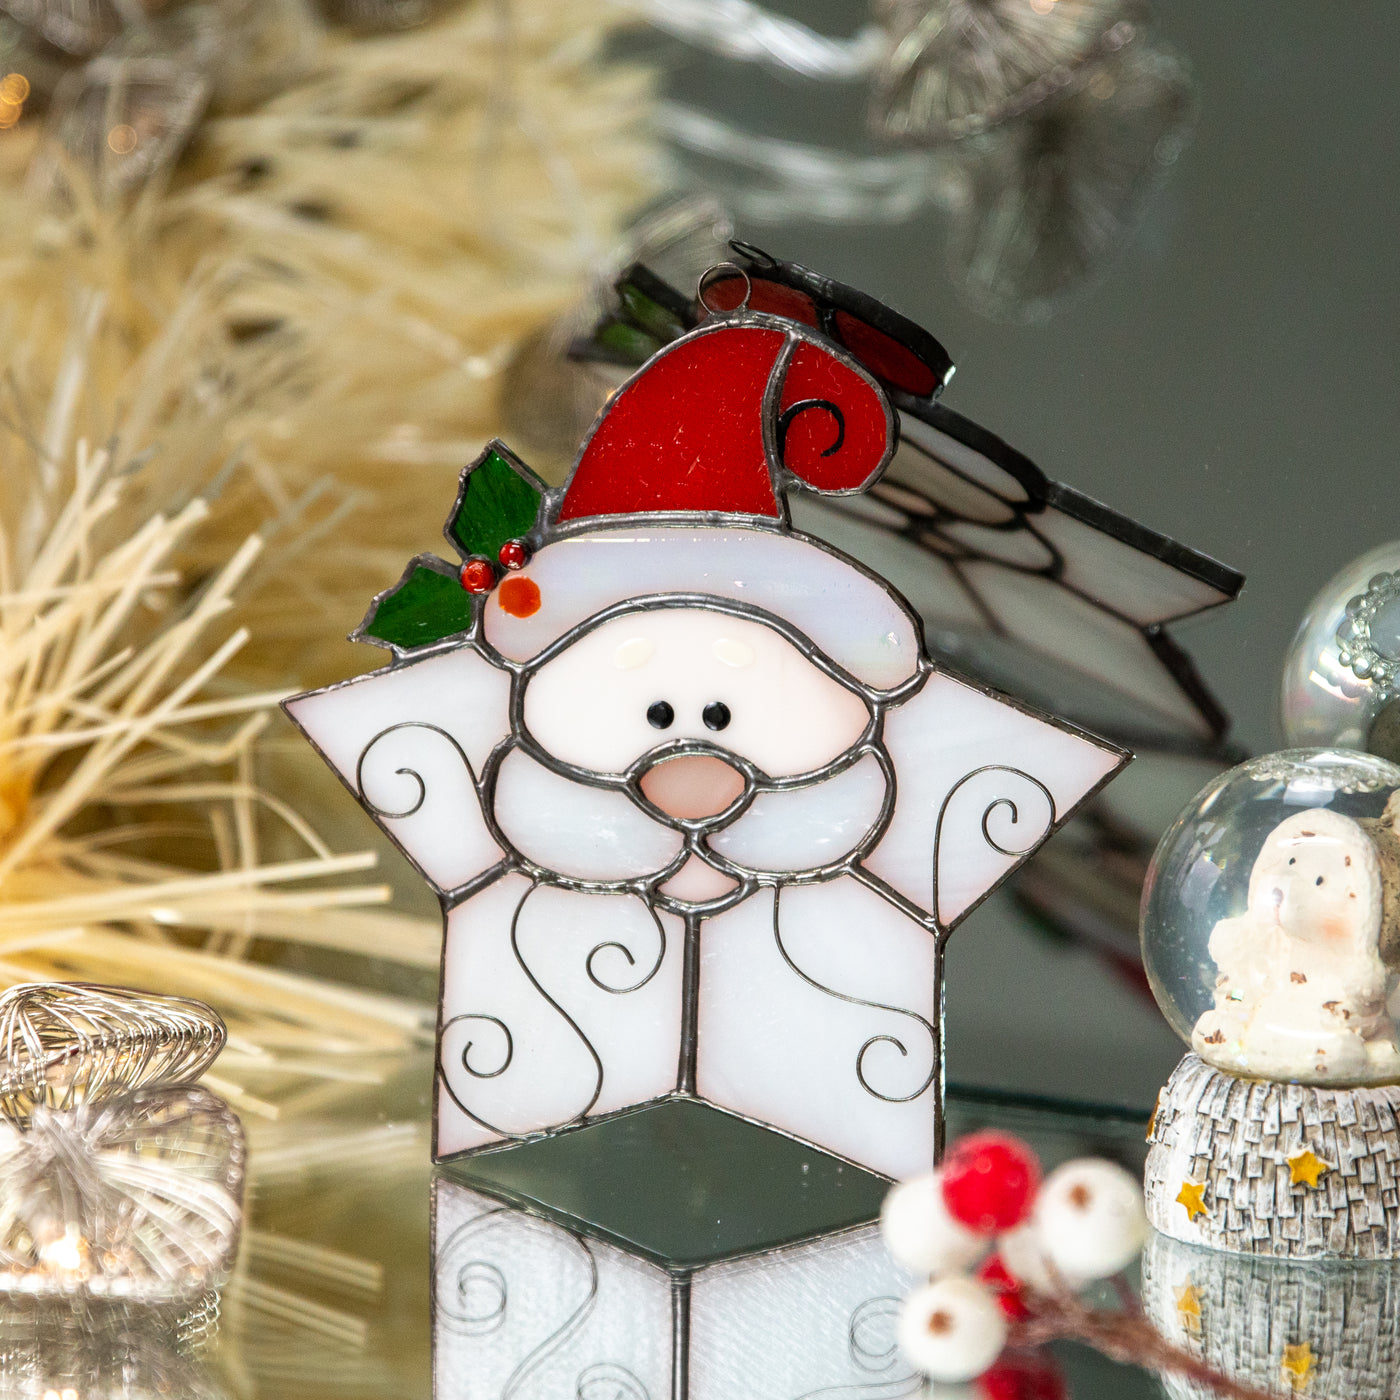 Stained glass snowflake Santa suncatcher for Christmas home decor